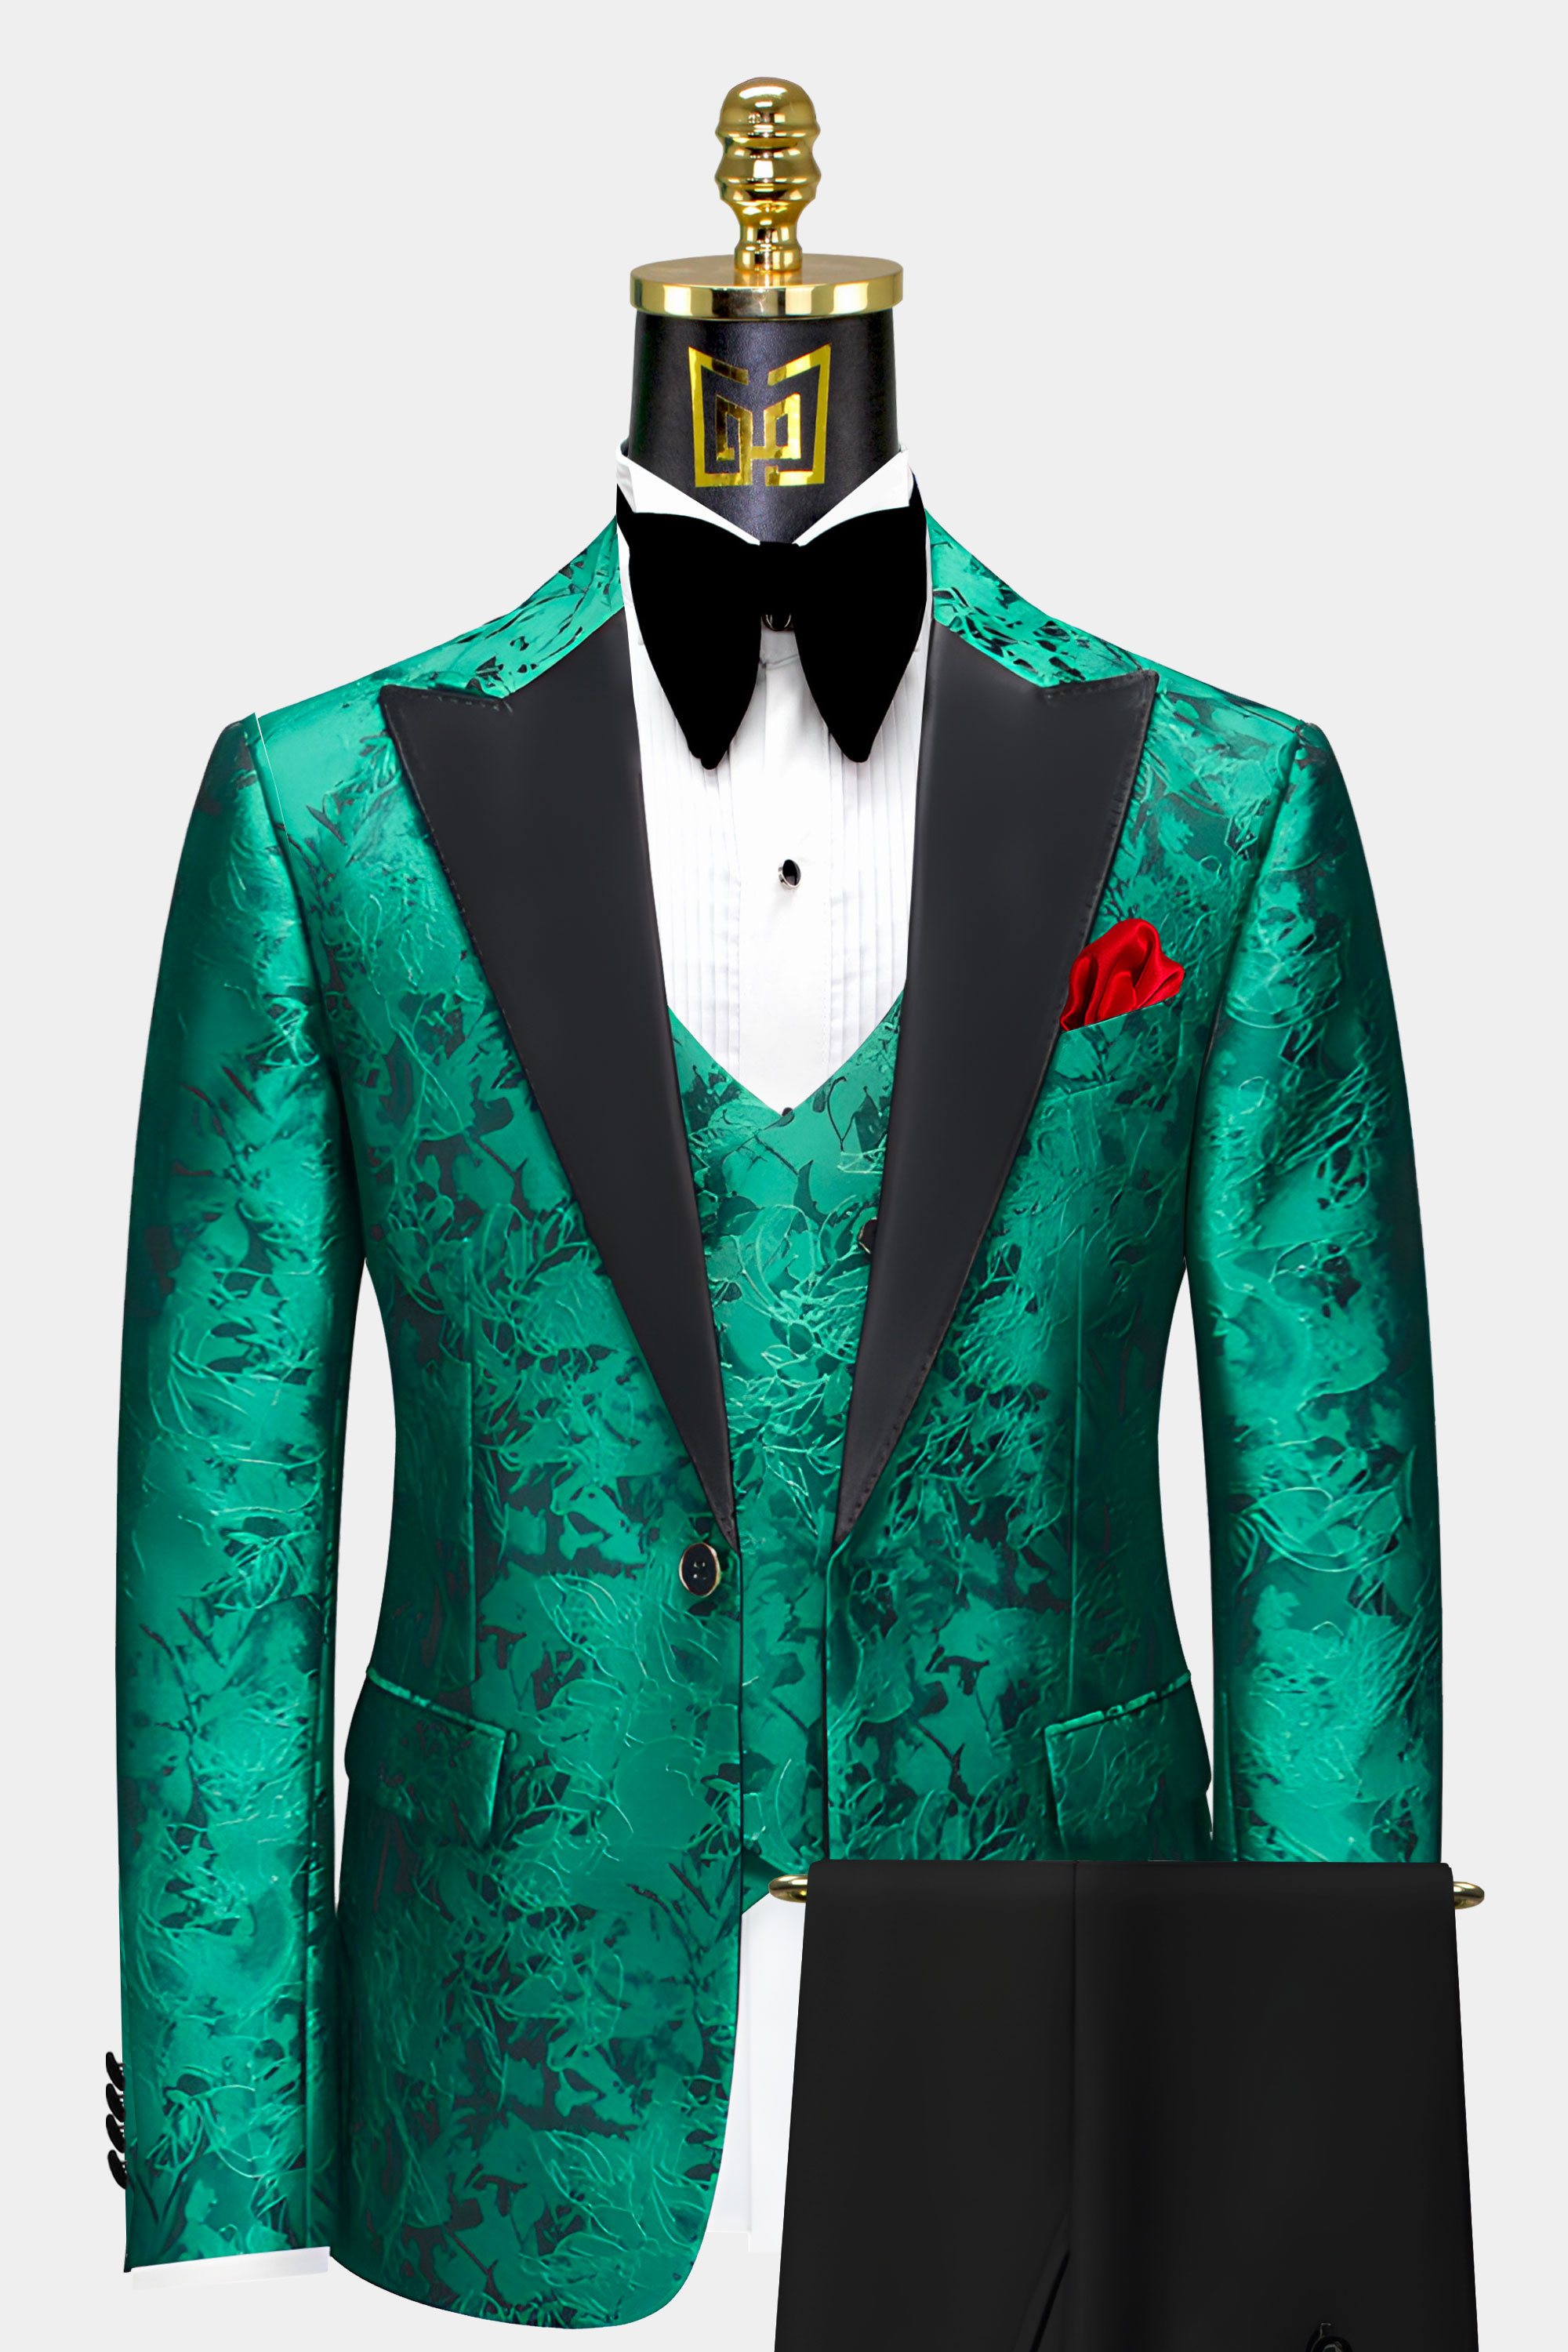 Black-and-Bright-Green-Tuxedo-Prom-Wedding-Groom-Suit-from-Gentlemansguru.com